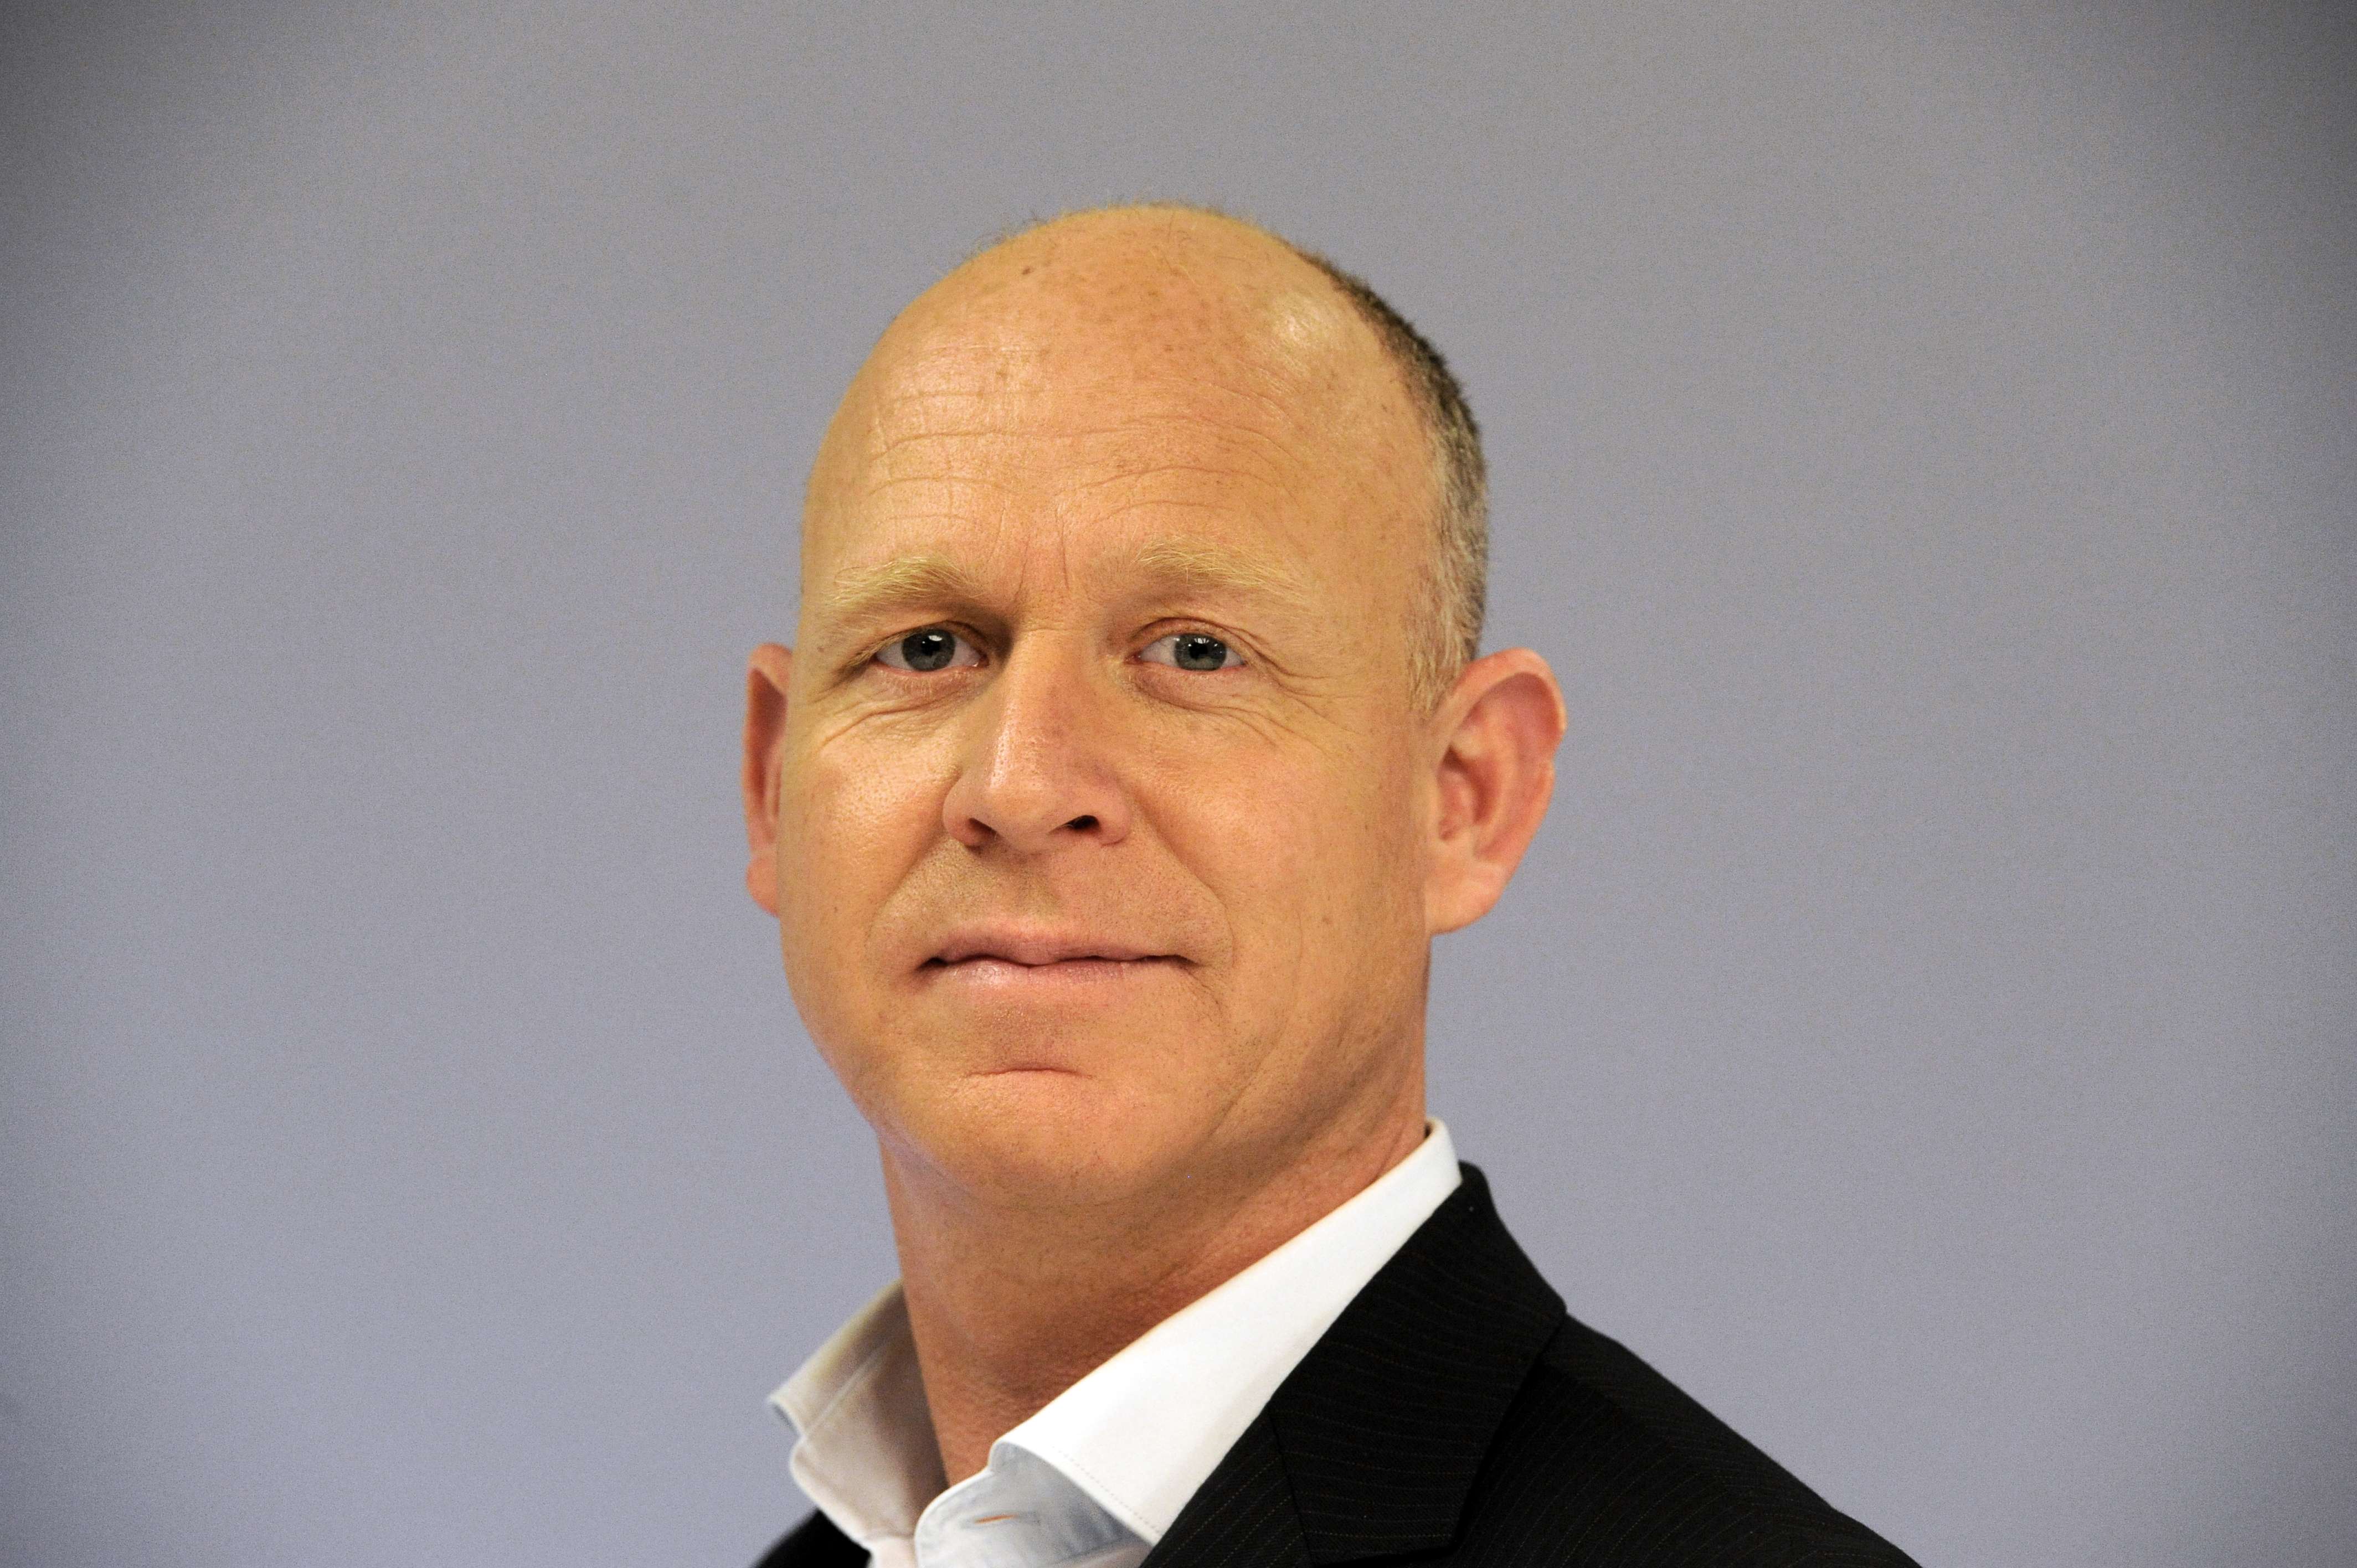 Paul van Gelder, member of the management board